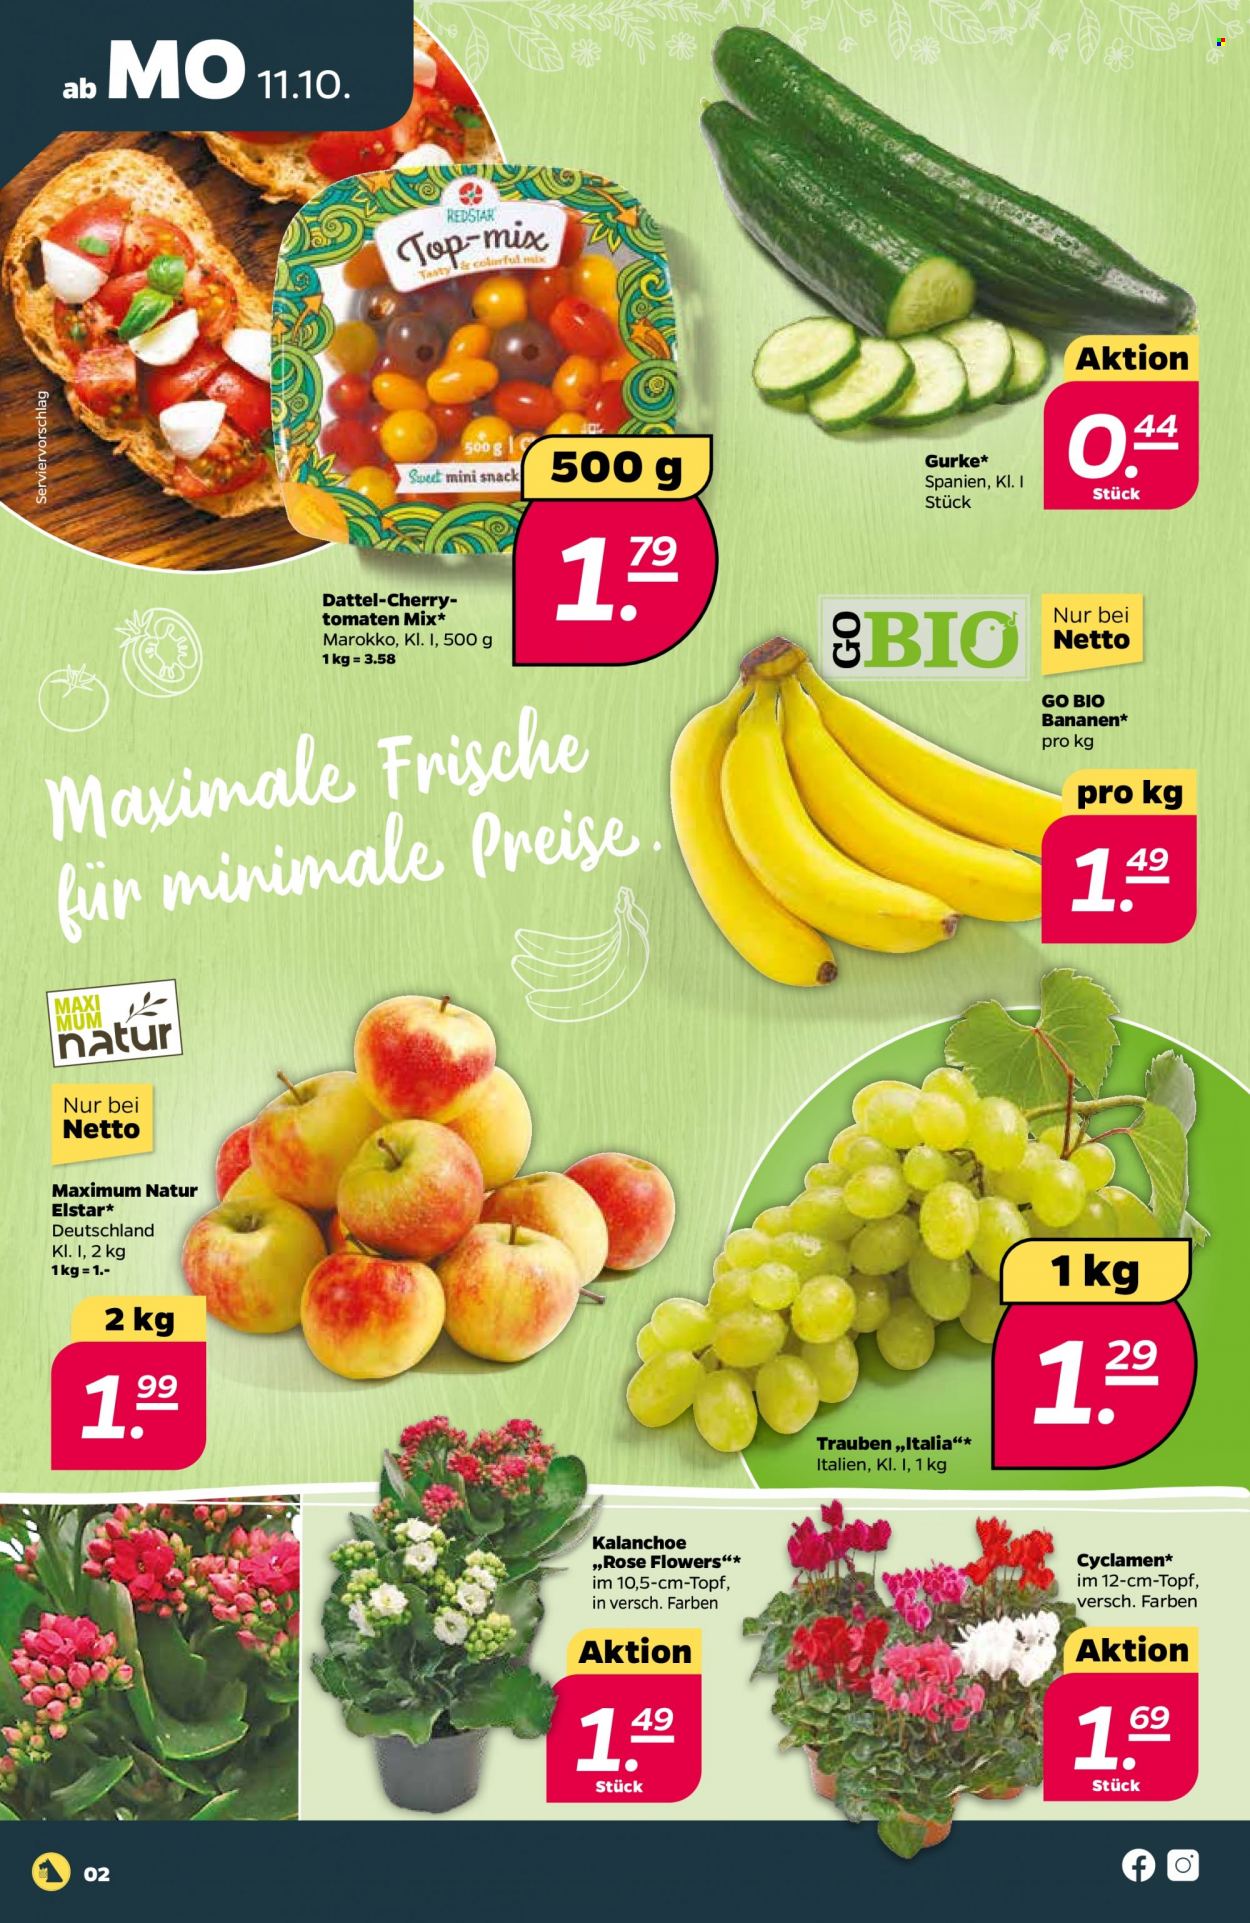 thumbnail - Prospekte Netto - 11.10.2021 - 16.10.2021 - Produkte in Aktion - Tomaten, Gurken, Trauben, Bananen, Flowers. Seite 2.